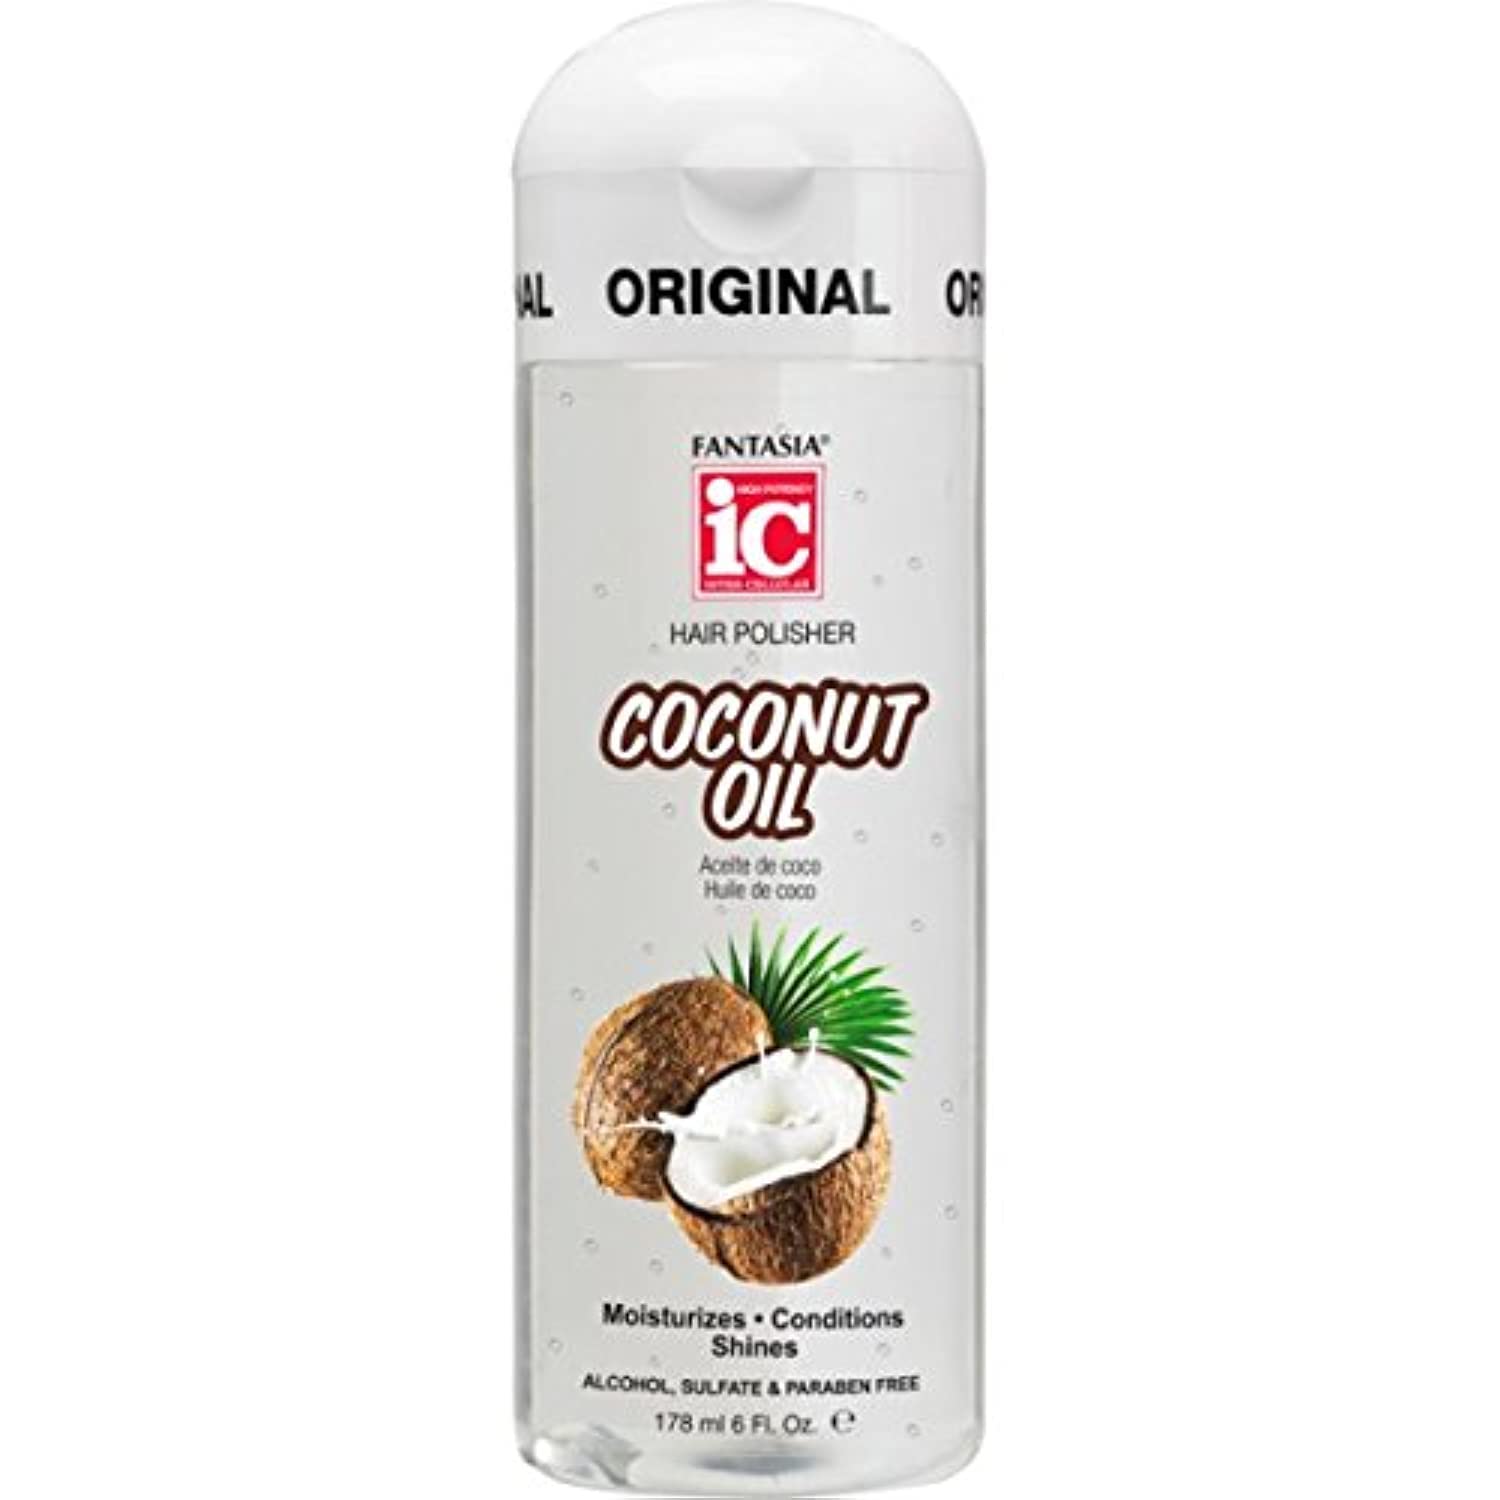 Fantasia Ic Hair Polisher 6oz Coconut Oil combo w/2oz gel - VIP Extensions